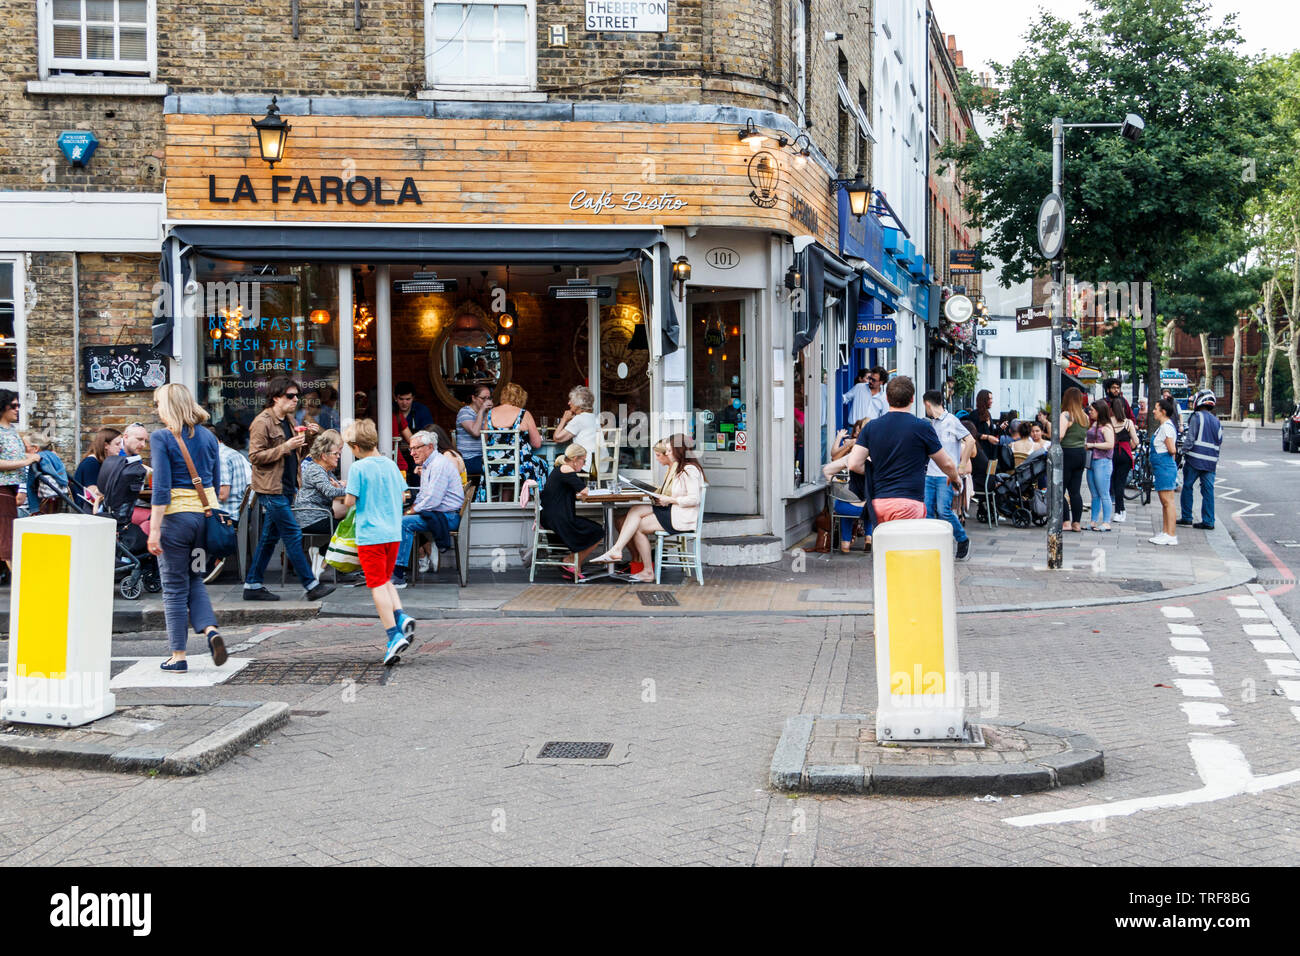 Alfresco diners outside La Farola restaurant on Upper Street, London, UK Stock Photo